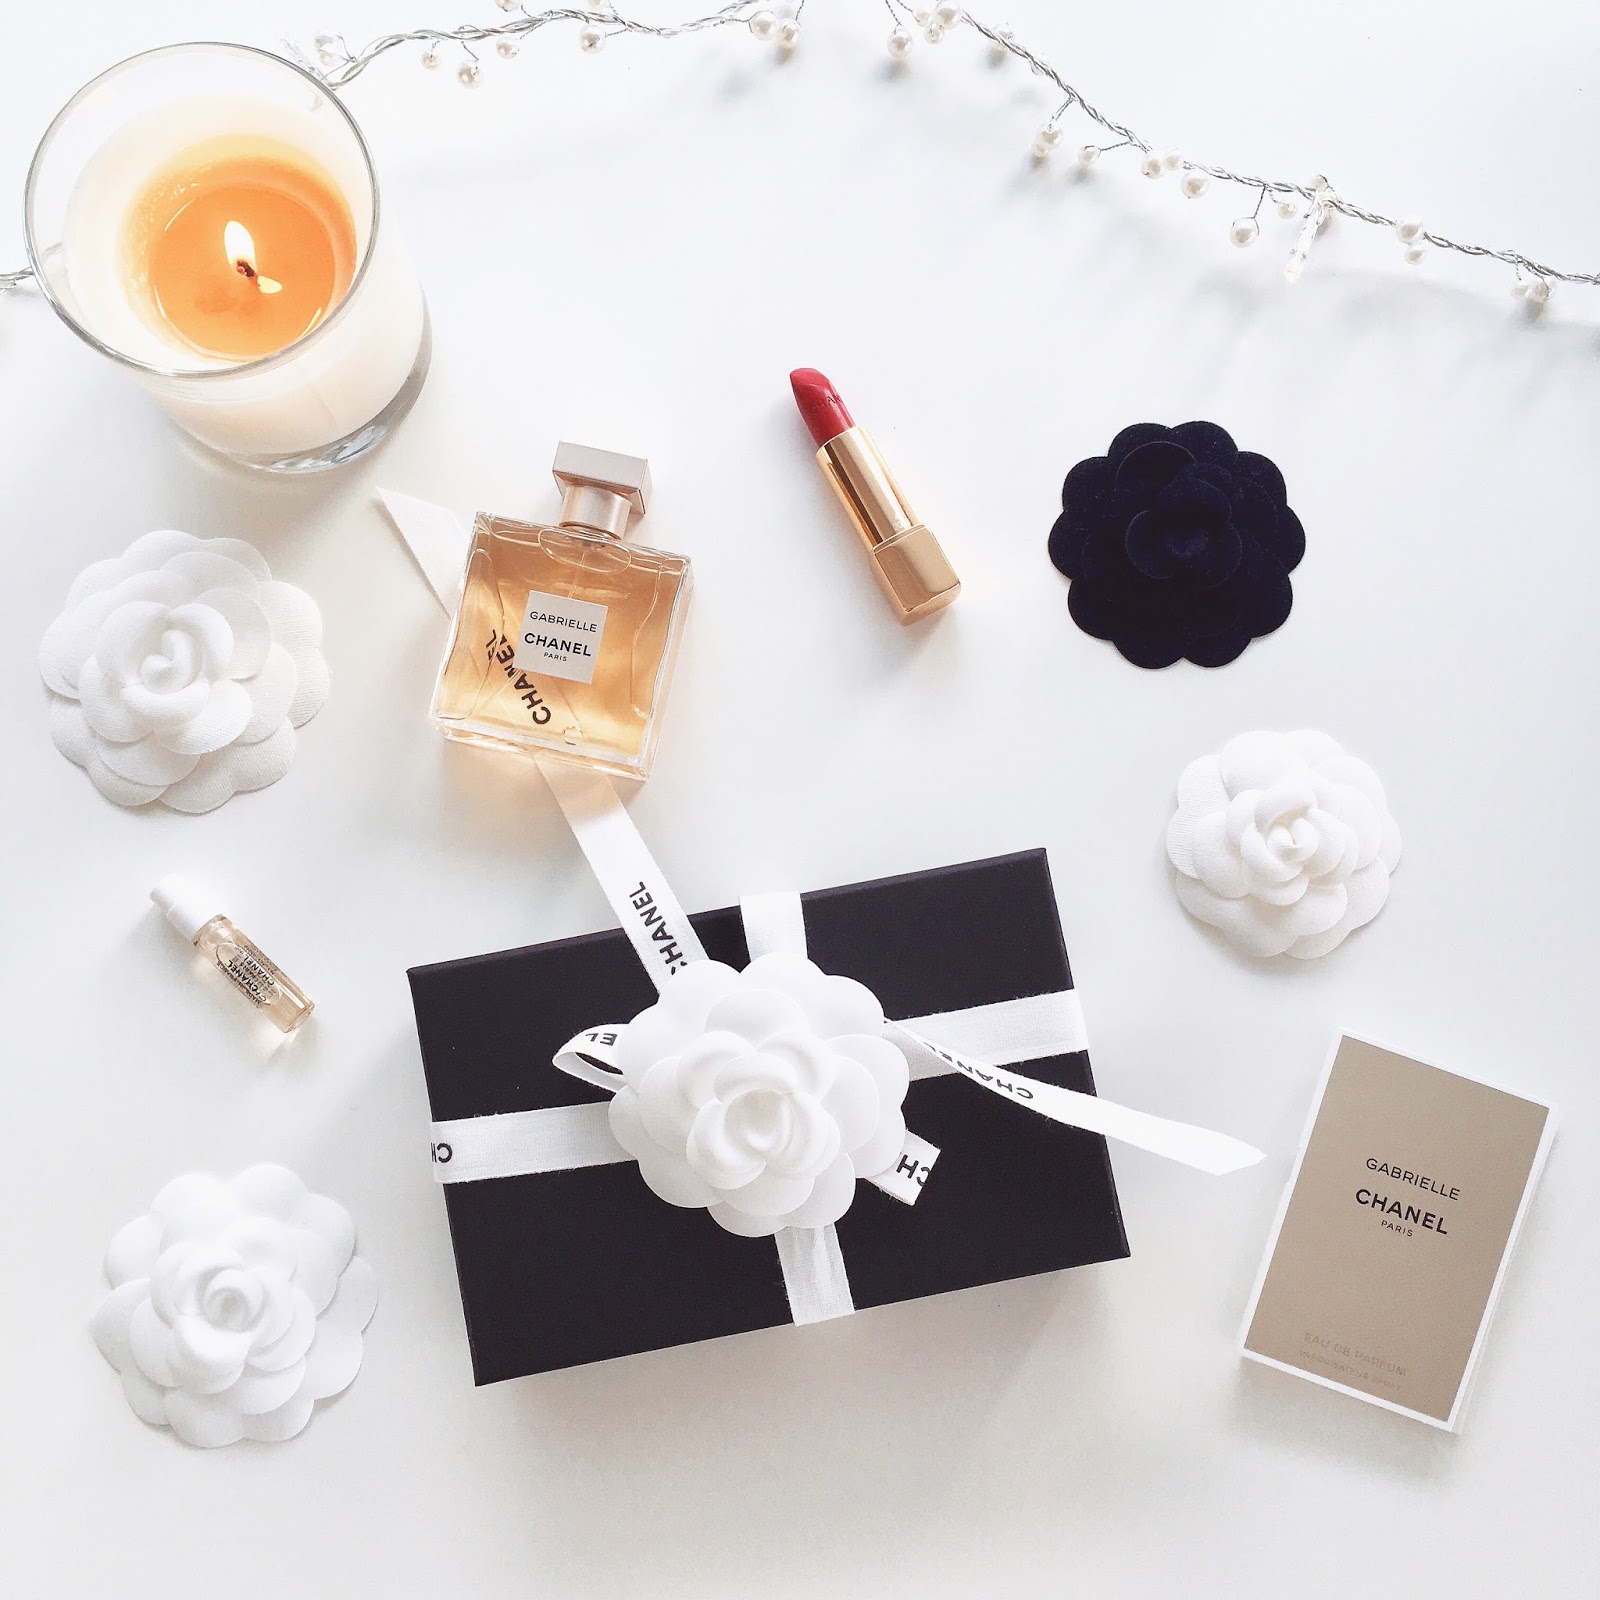 Beauty Boom! Chanel Gabrielle Eau de Parfum For New Year!